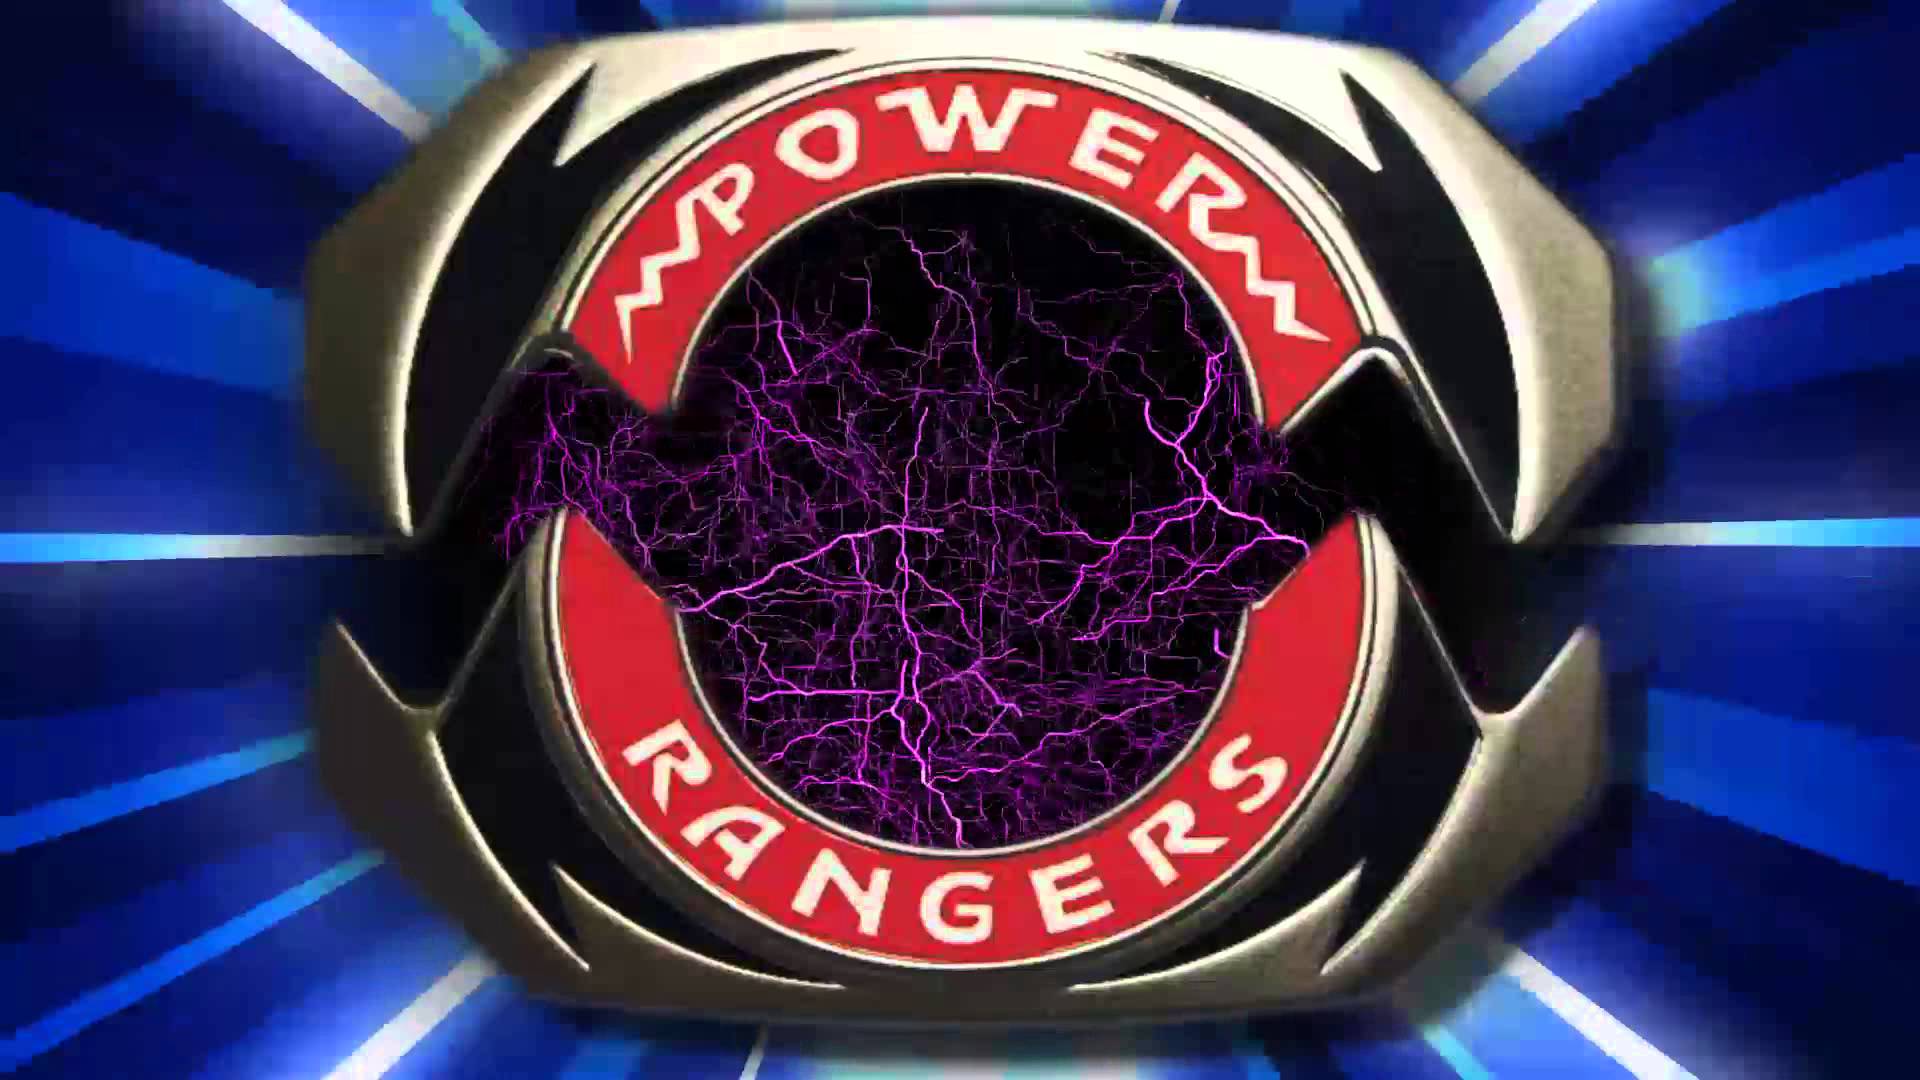 Power Rangers Morphing Background - YouTube